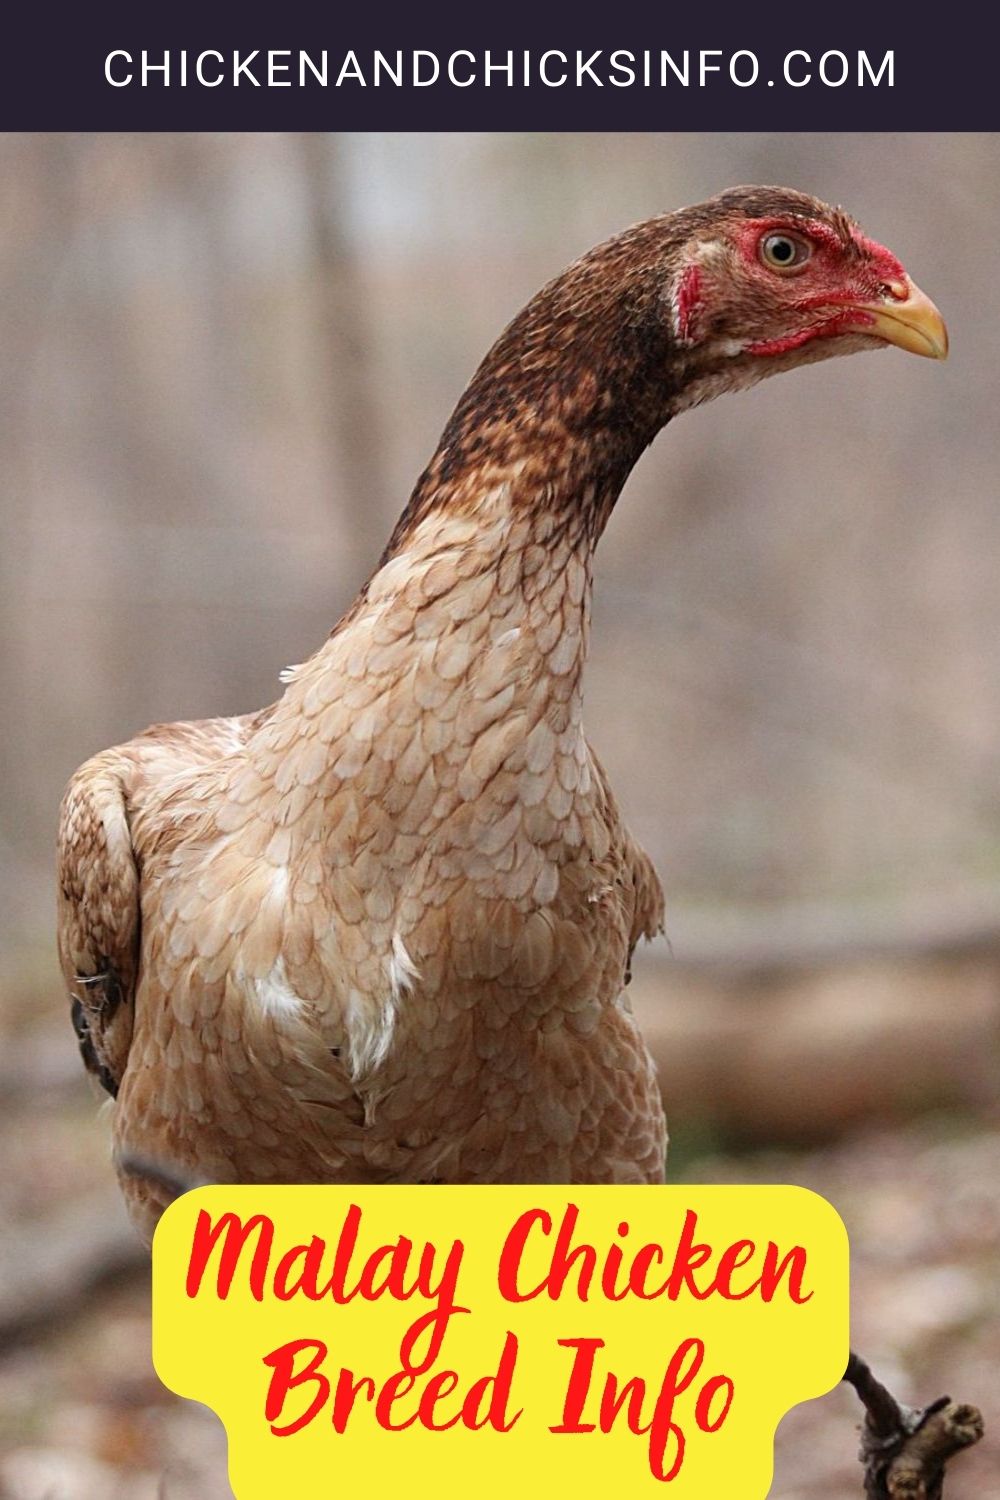 Malay Chicken Breed Info pinterest image.